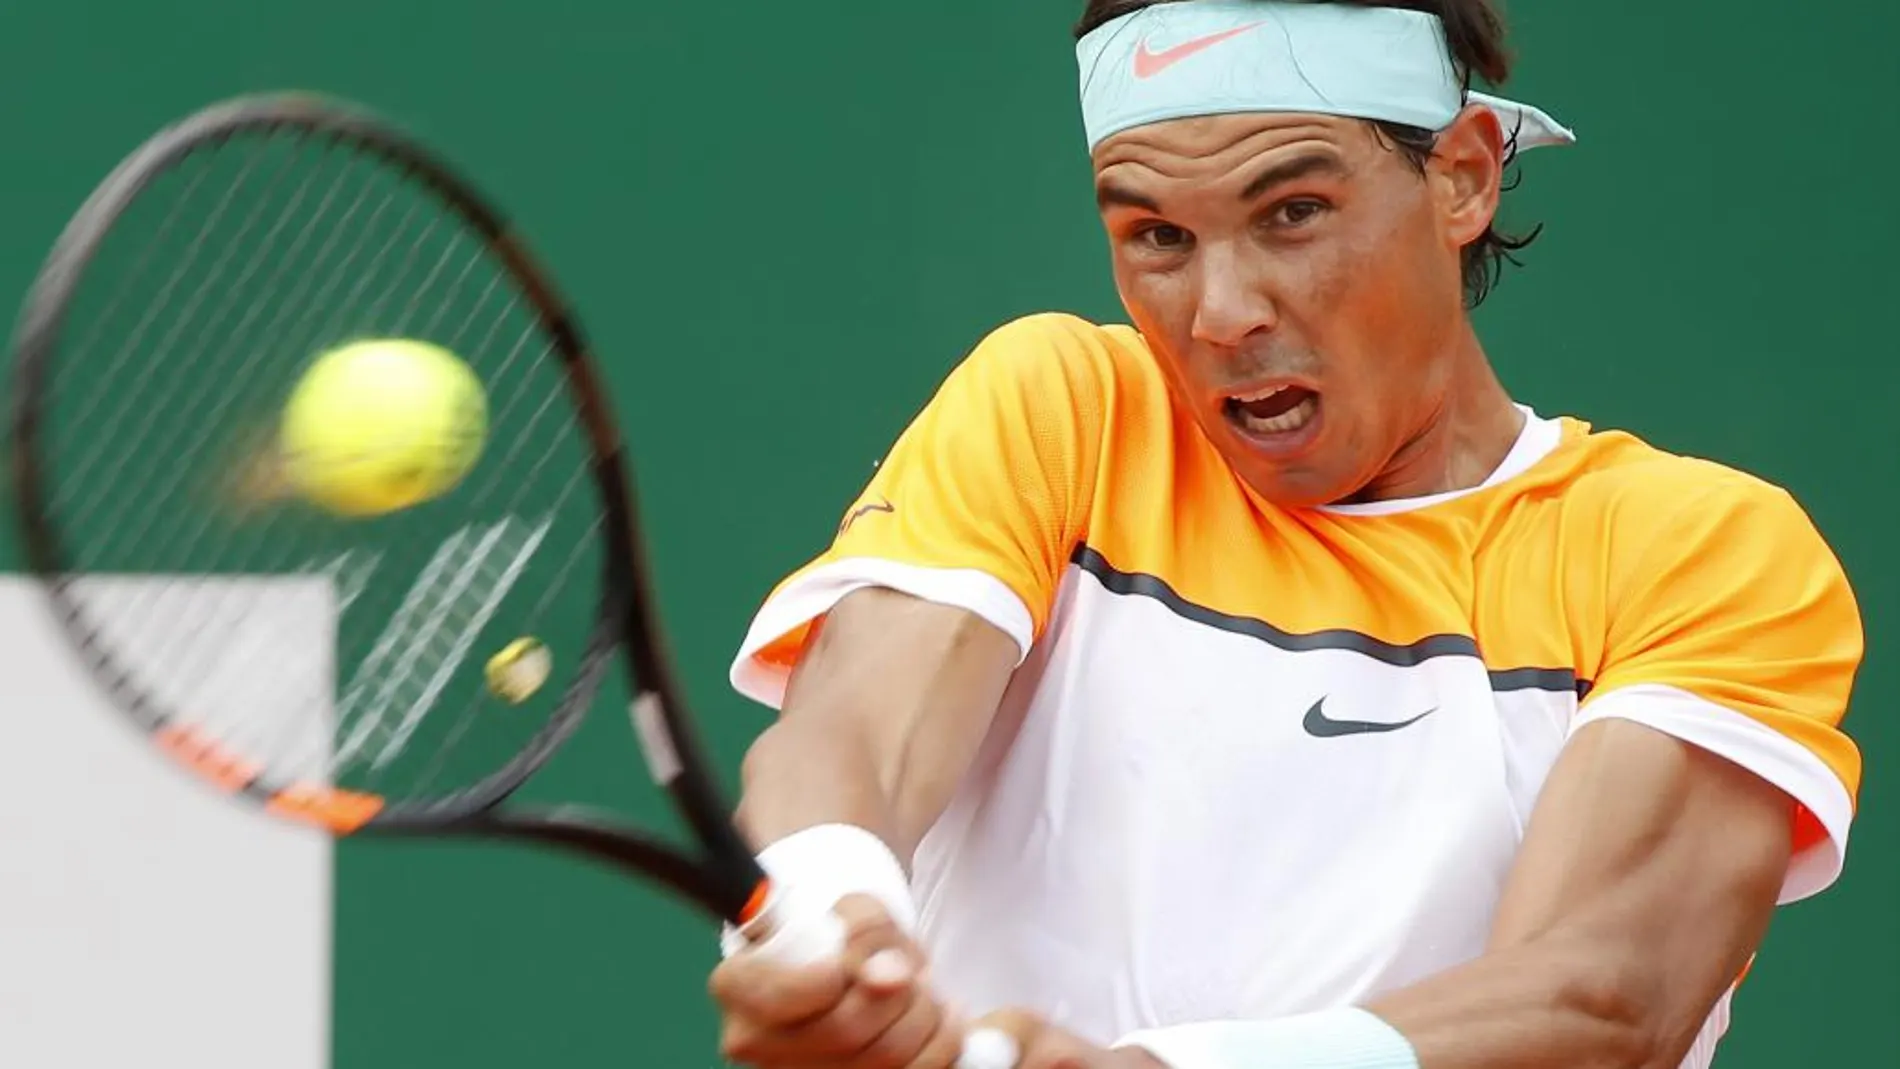 Rafa Nadal cayó en semifinales de Montecarlo frente a Djokovic